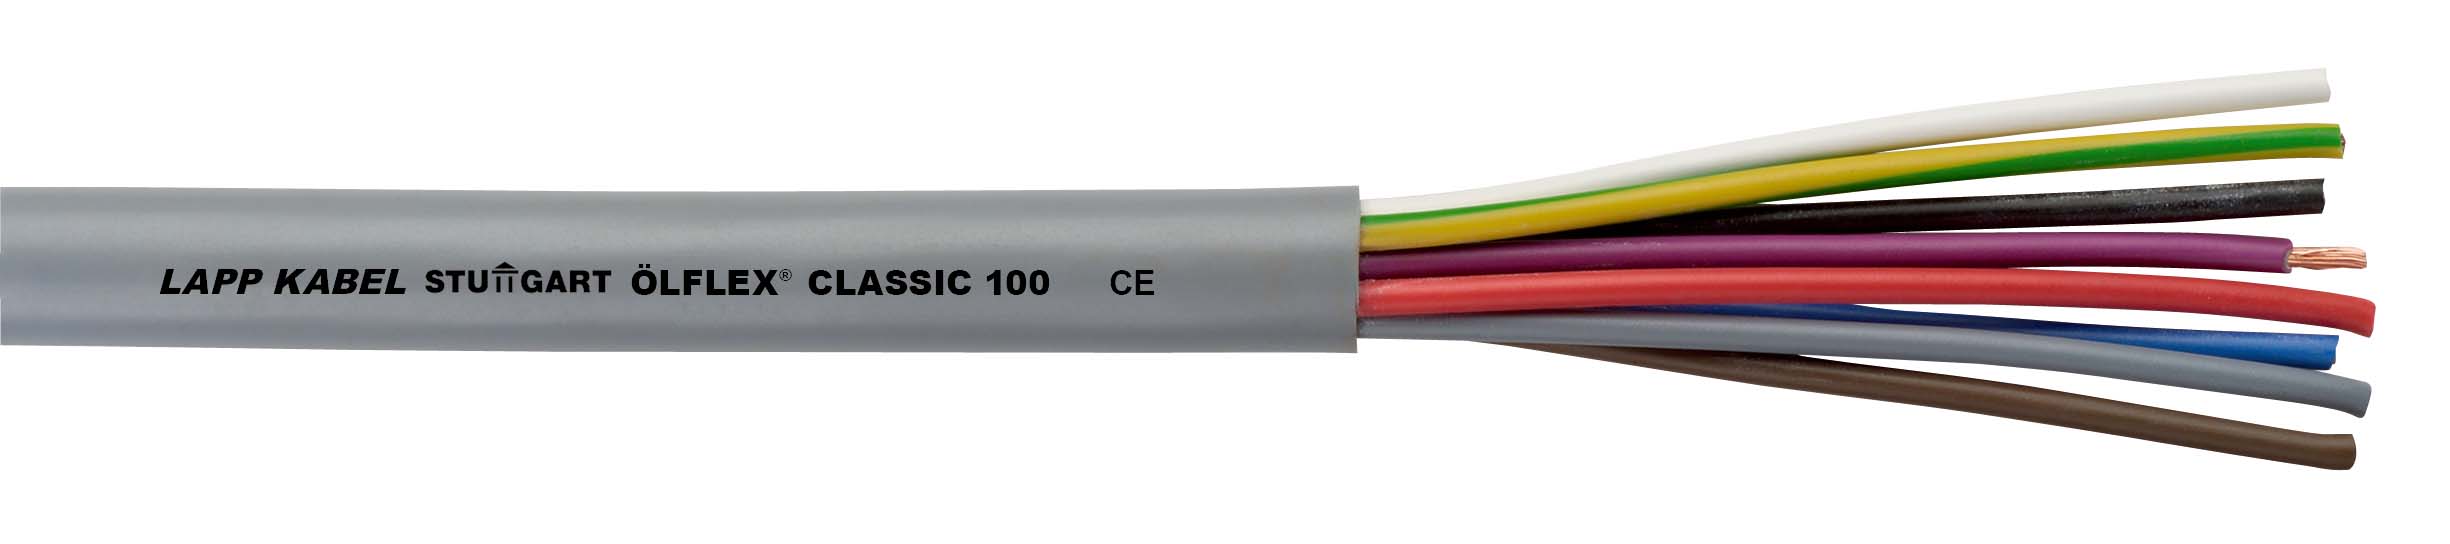 Lapp Kabel&Leitung ÖLFLEX CLASSIC 100 3G1,5 00100644 T500 - 00100644/500